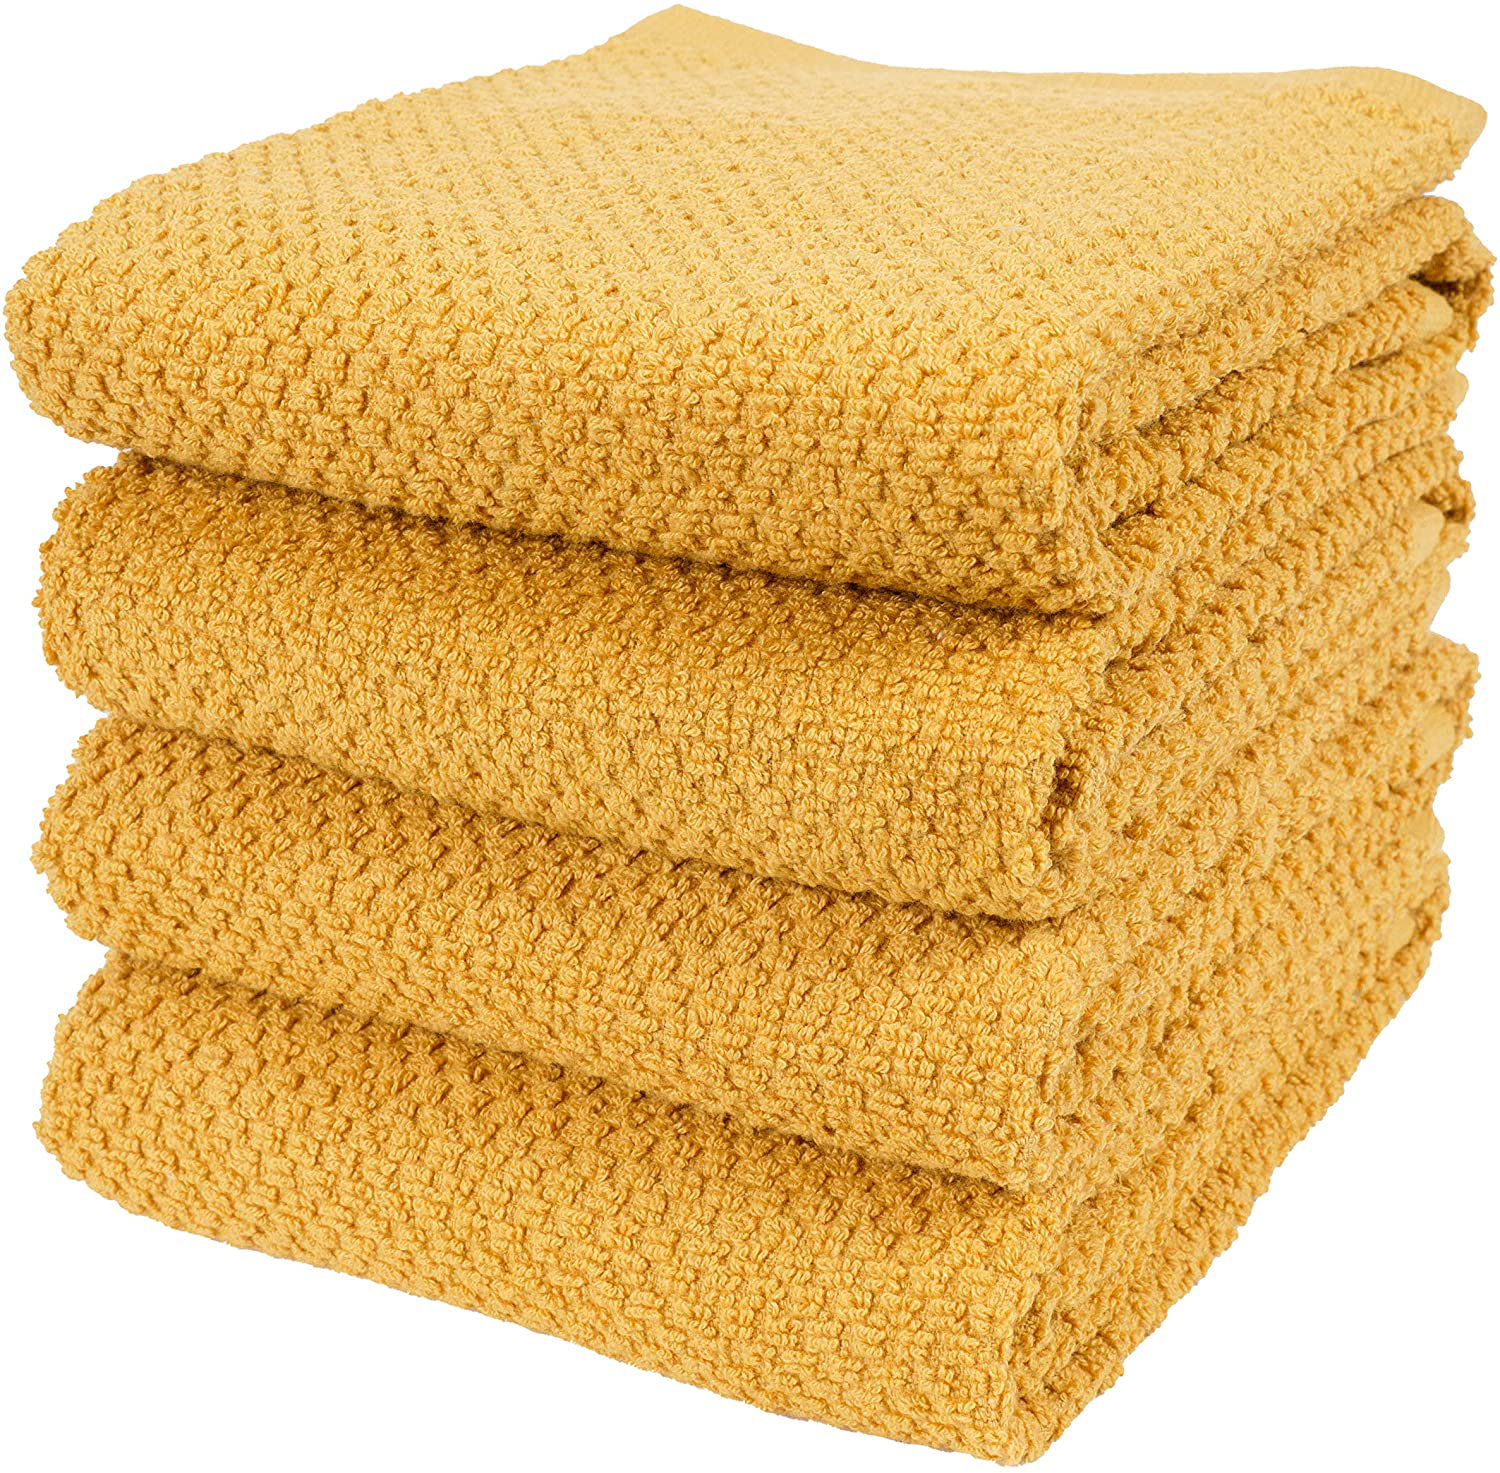 Gracie Oaks Terry Towels Plaid Ripple Dish Cloth